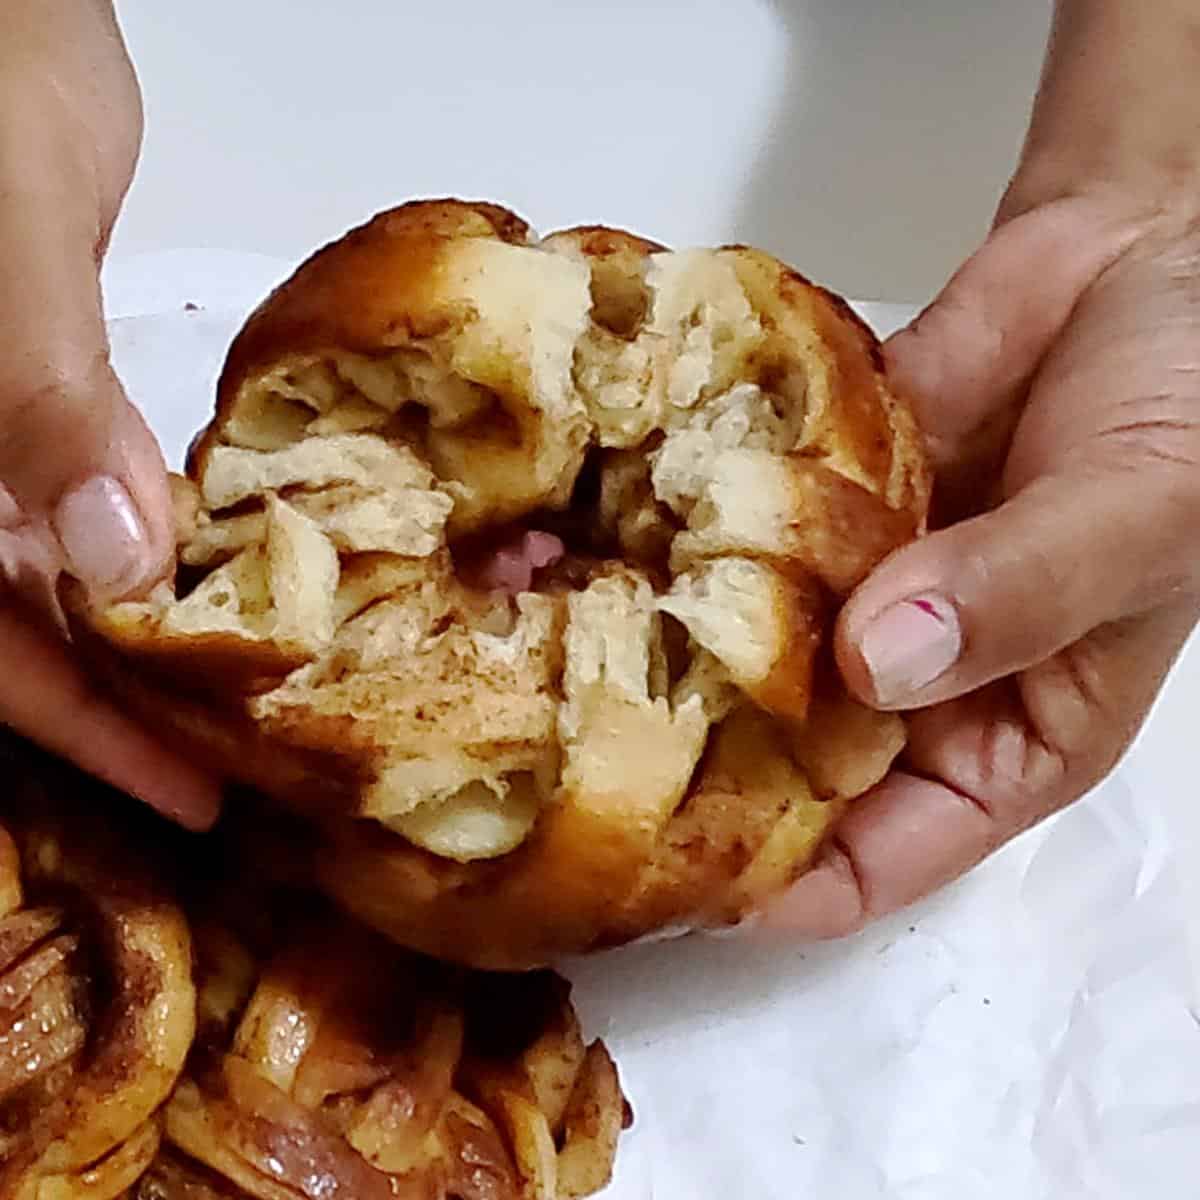 Breading a cinnamon bun.